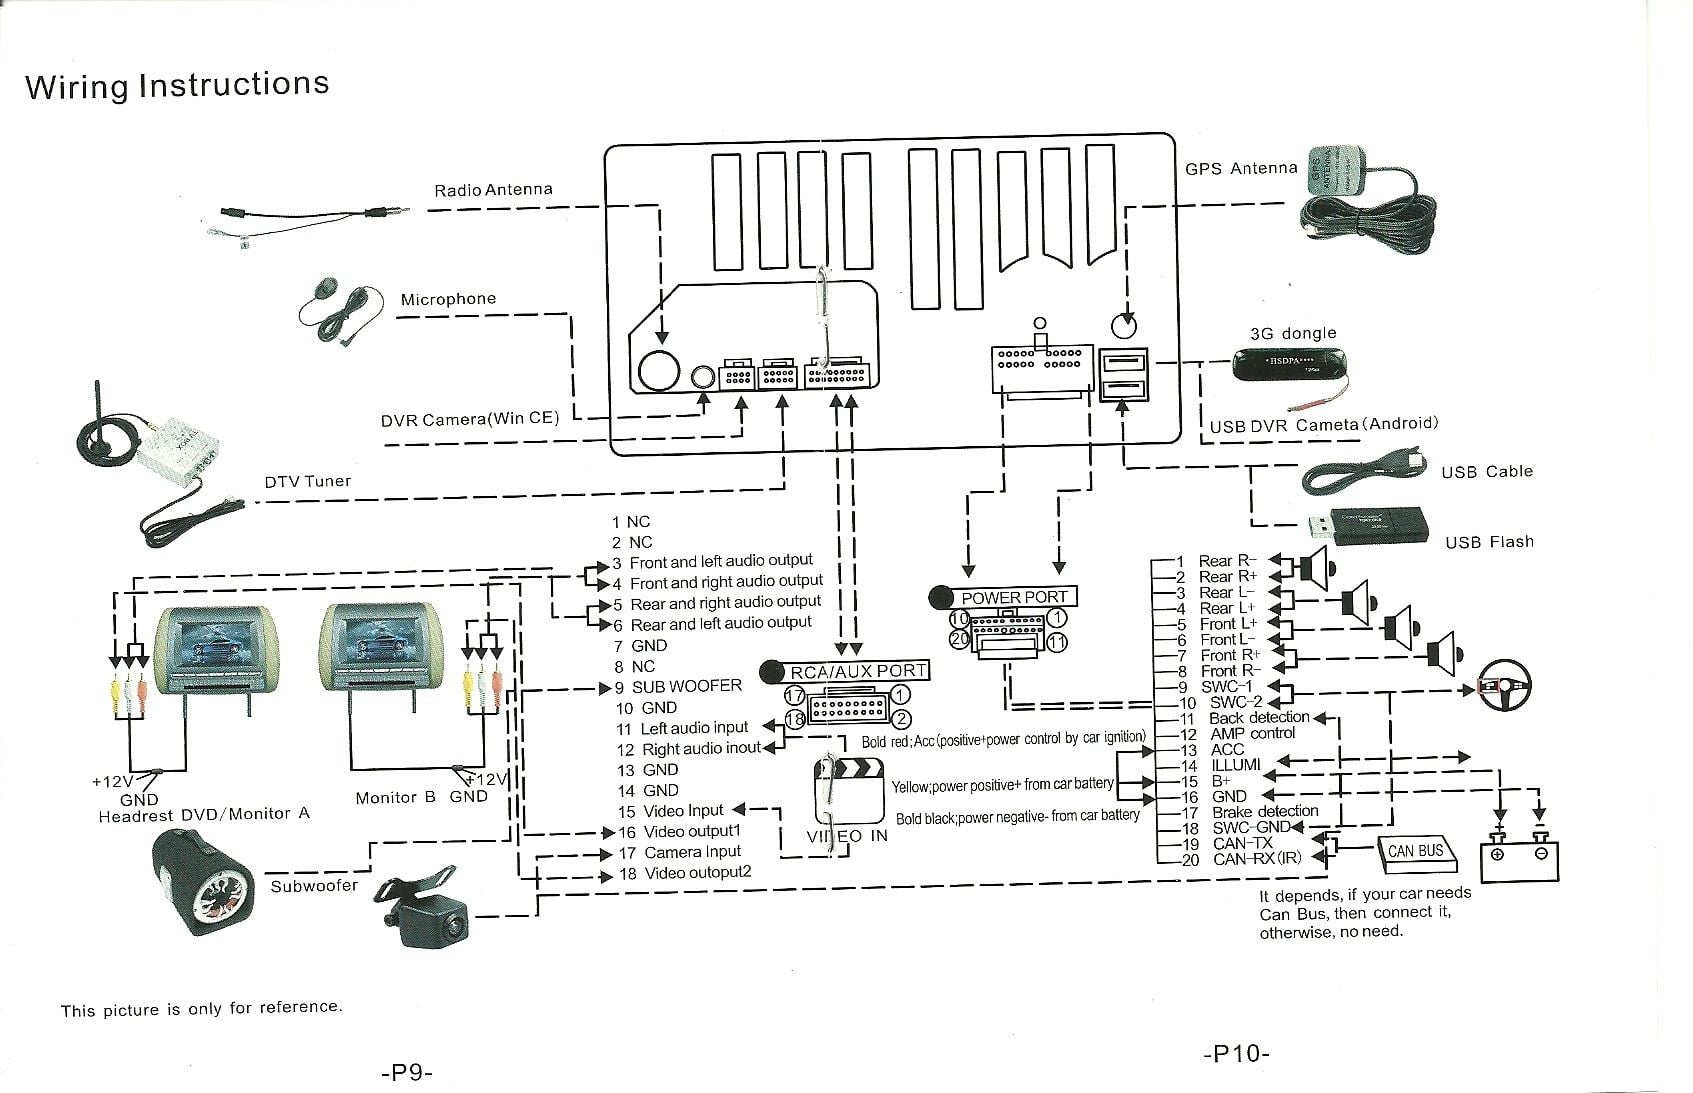 Diagram Chinese Head Unit Wiring Diagram Full Version Hd Quality Wiring Diagram Mydigitalstyle Italiagelatotour It